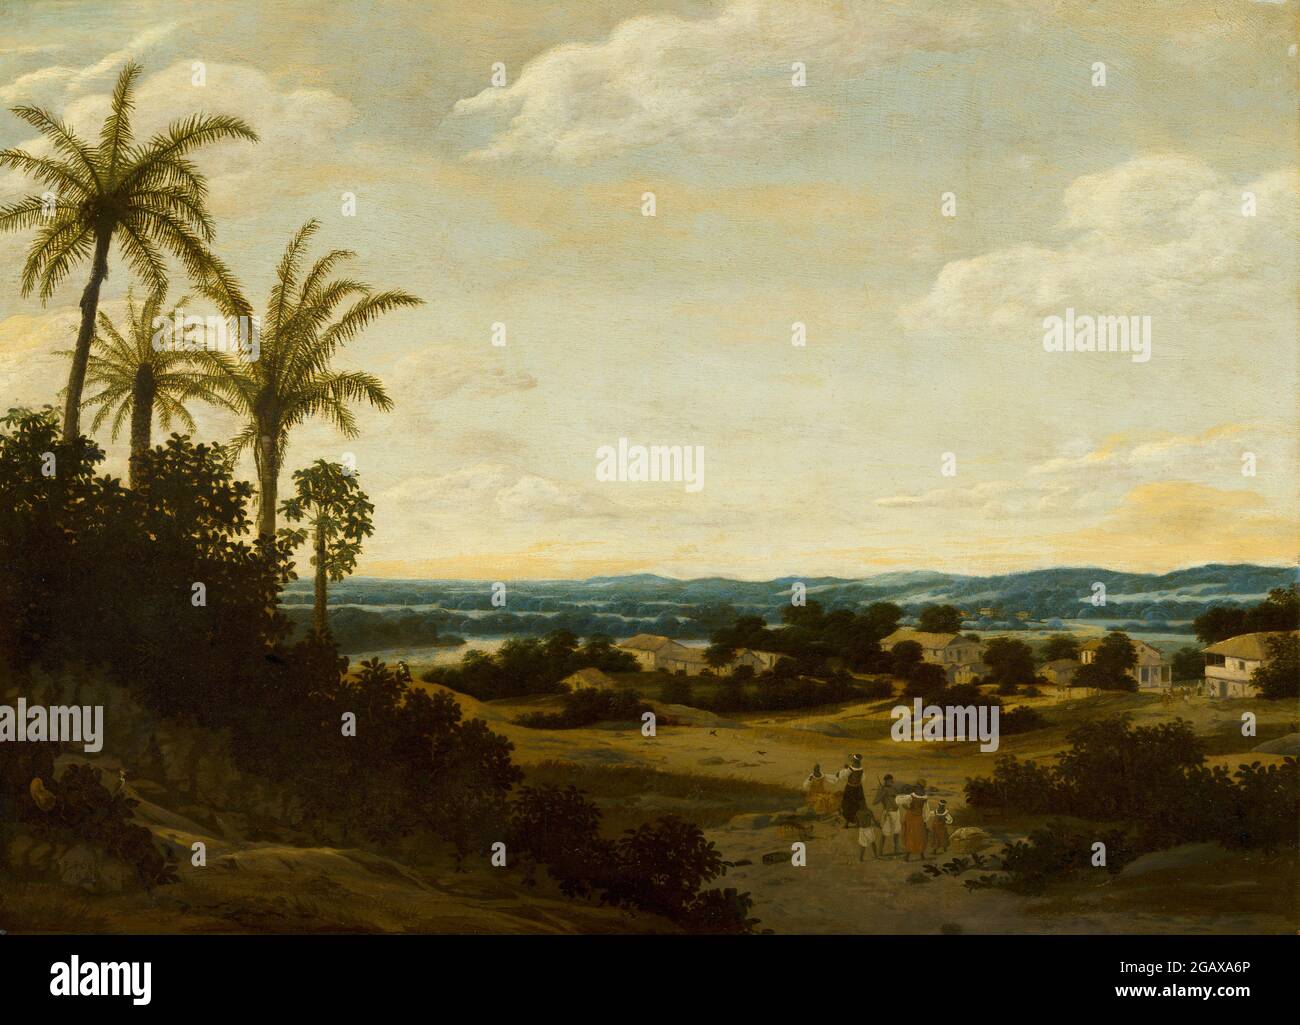 Titel: Brazilian Landscape / Paisagem Brasileira Ersteller: Frans Janszoon Post Datum: 1667 Medium: Öl auf Tafel Maße: 50 x 69 cm Ort: Mauritshuis Stockfoto